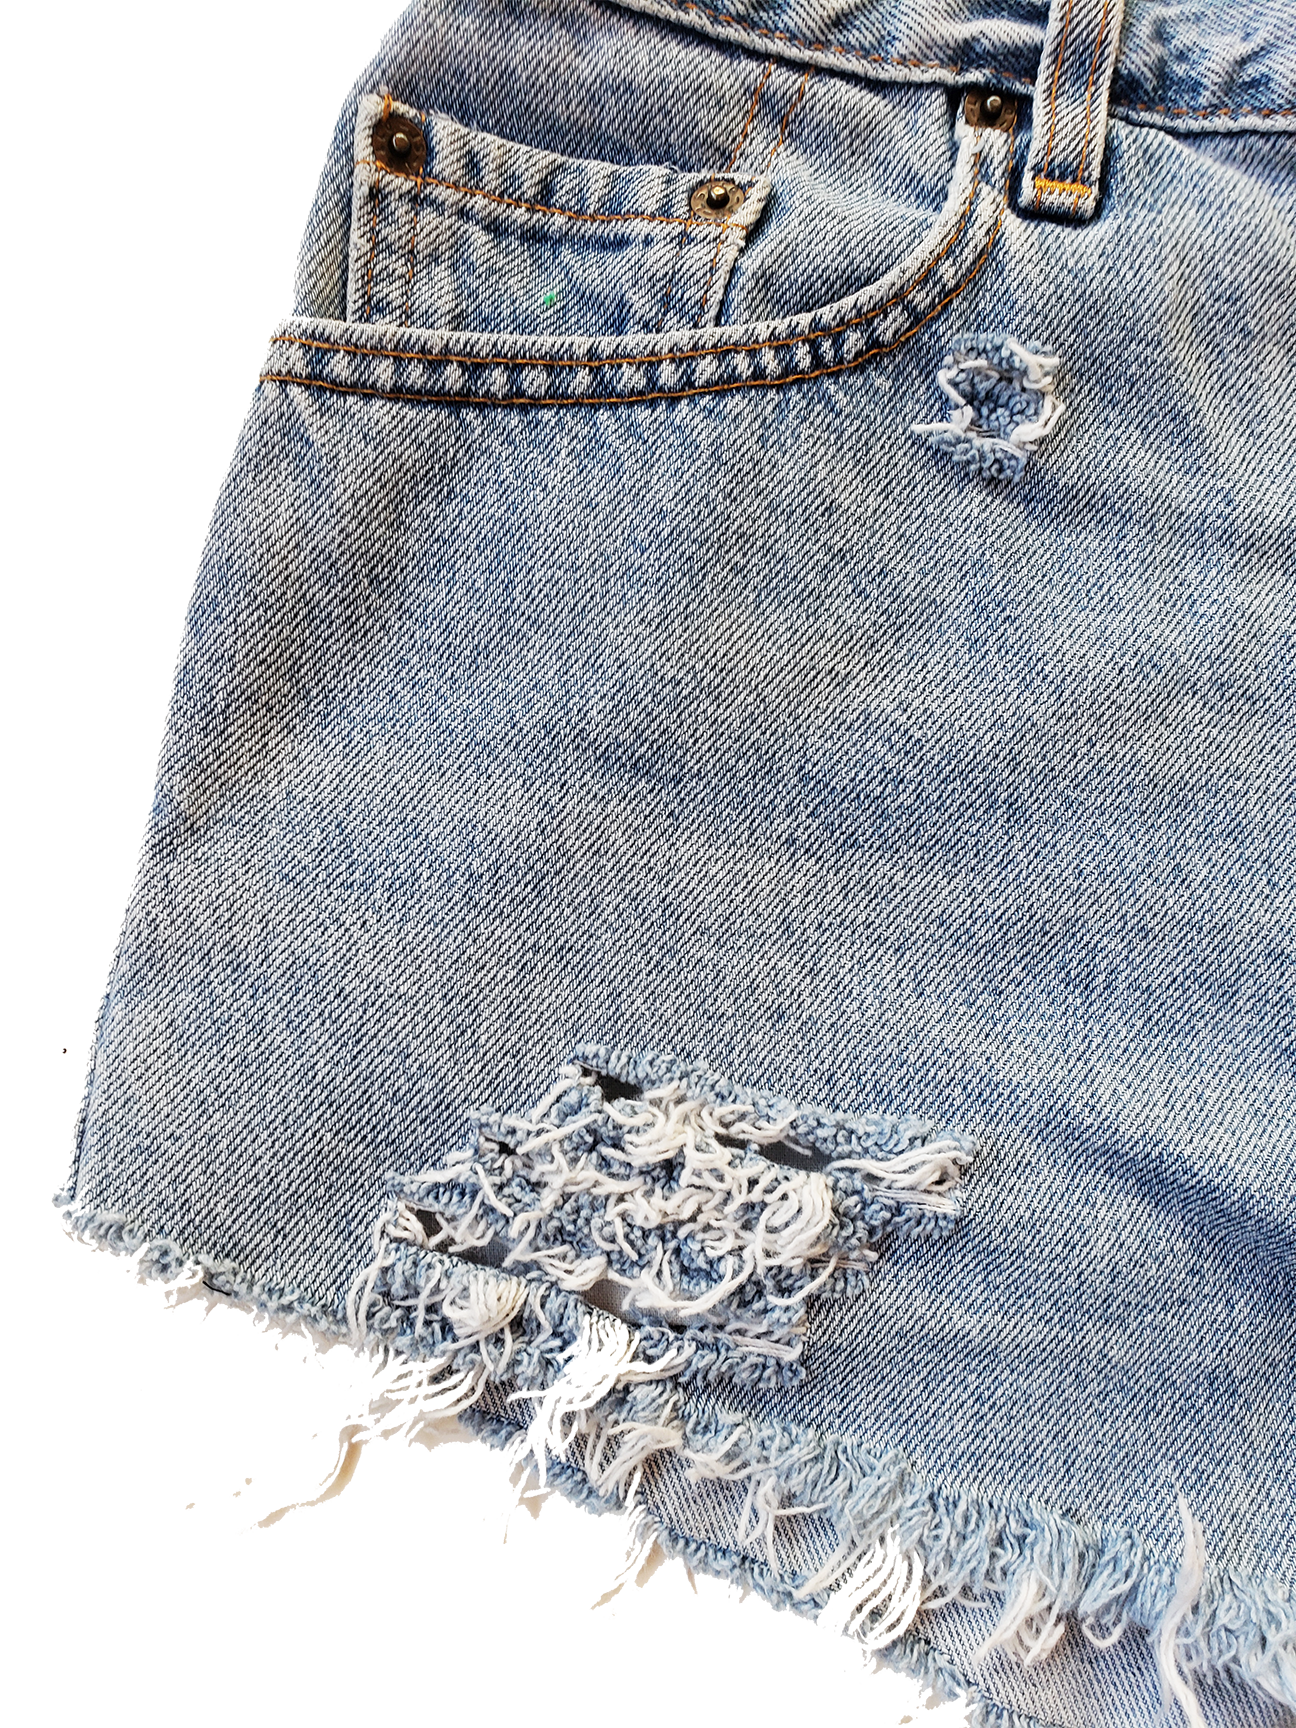 High Waist Vintage Levi's Denim Shorts (Only 1)